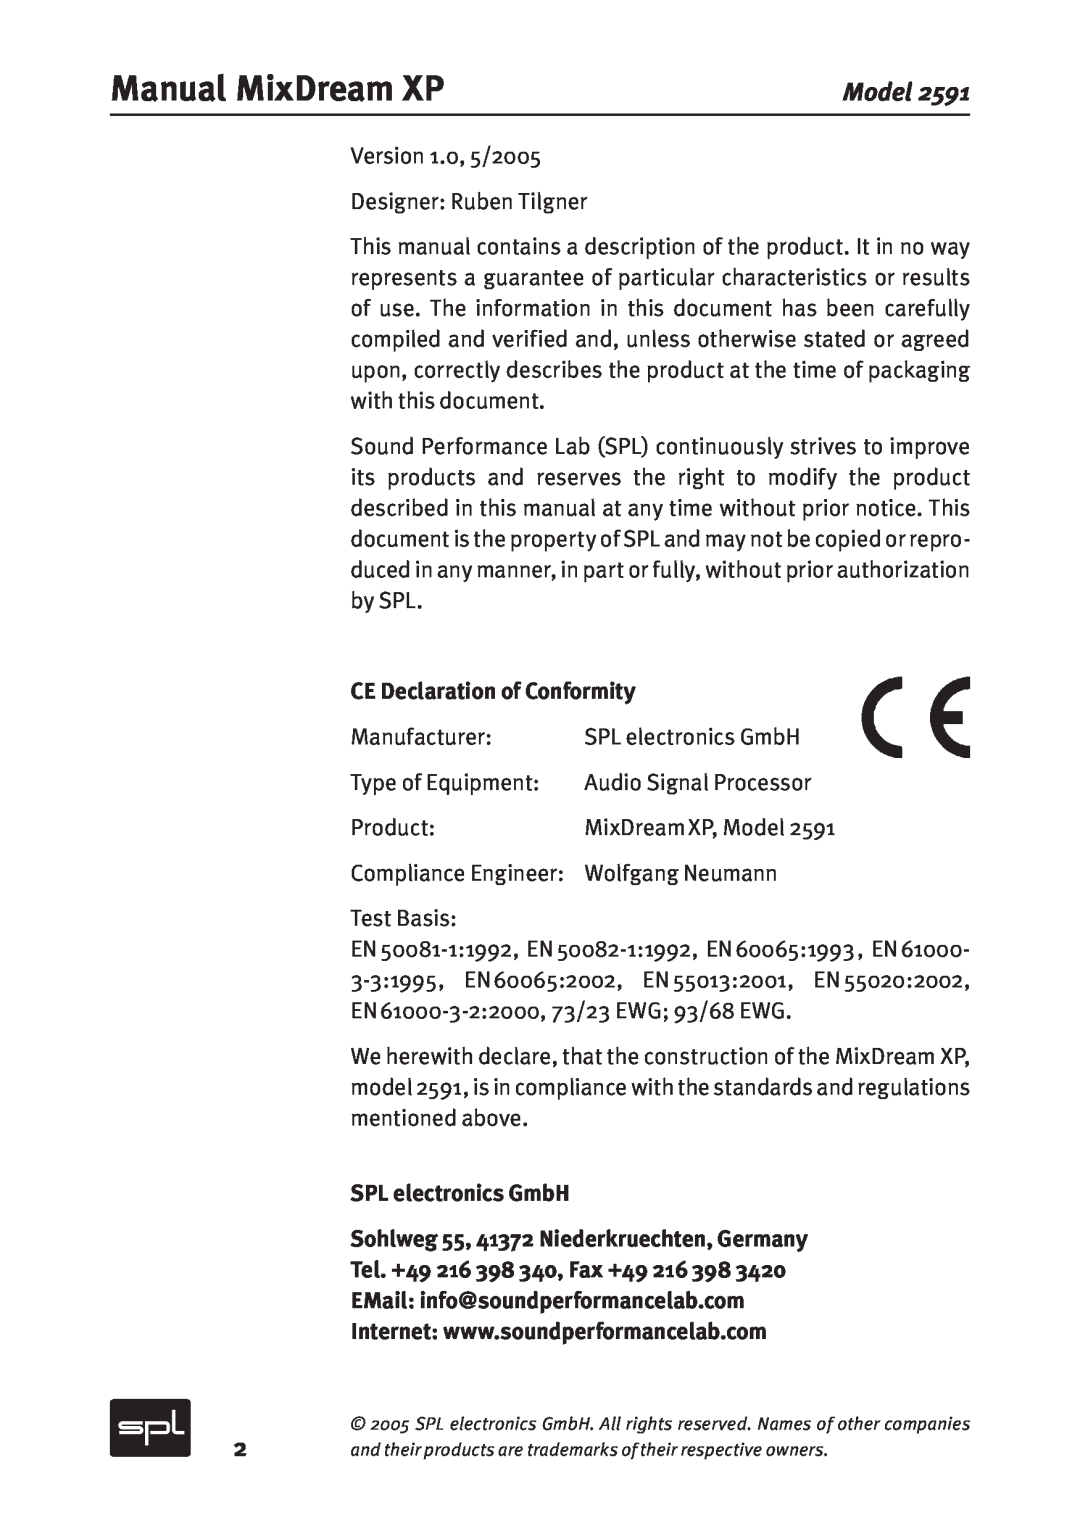 Sound Performance Lab Model 2591 manual Manual MixDream XP, CE Declaration of Conformity, SPL electronics GmbH 